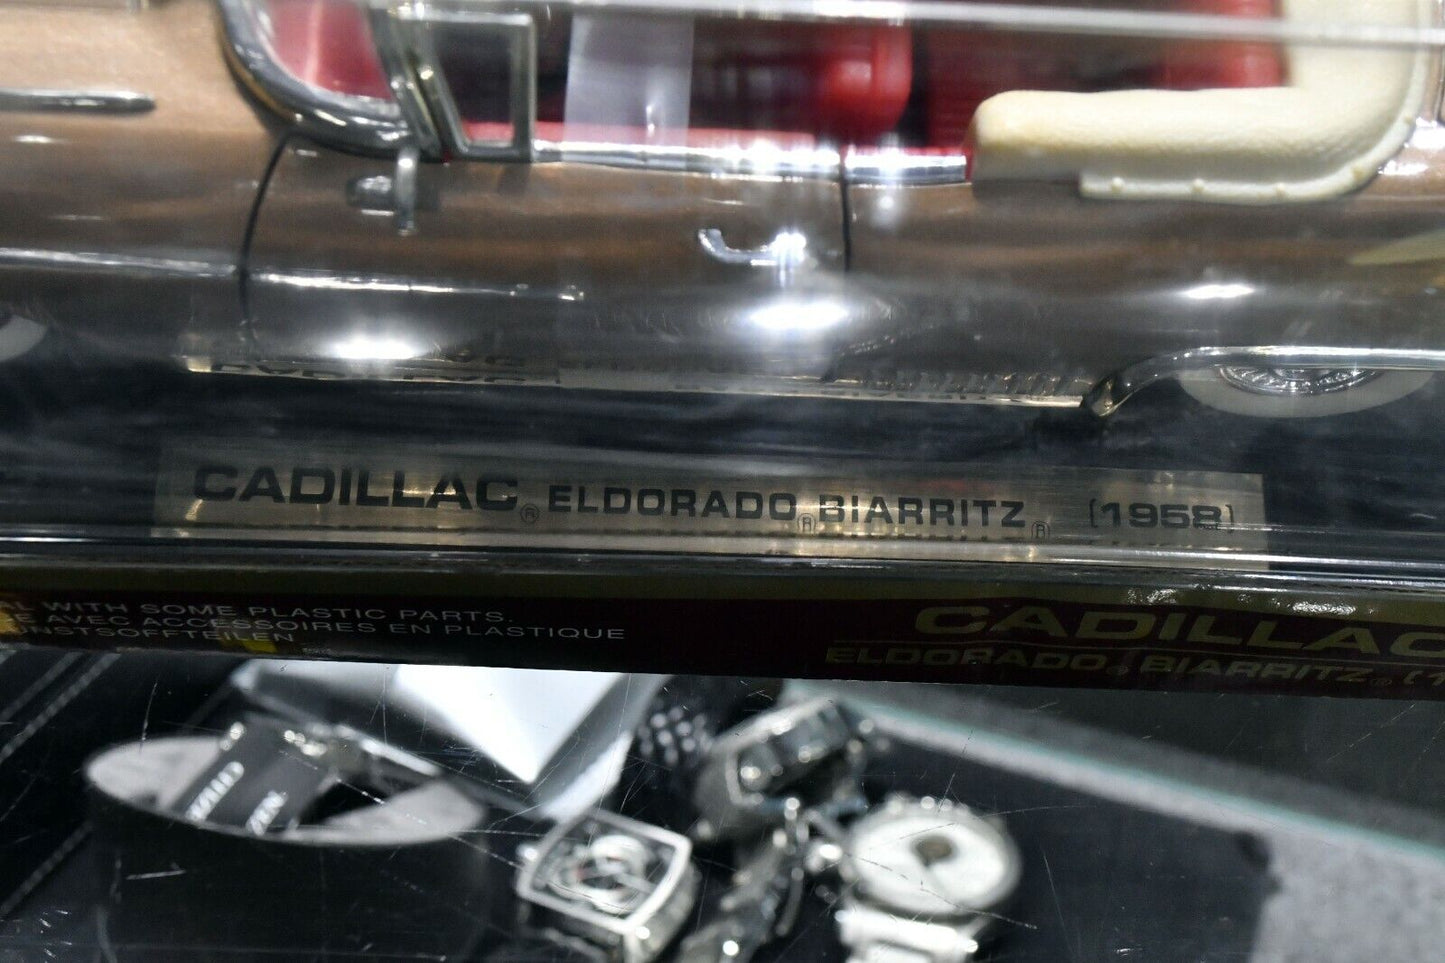 Road Legends 1958 Cadillac Eldorado Biarritz Convertible  1:18 Scale Boxed